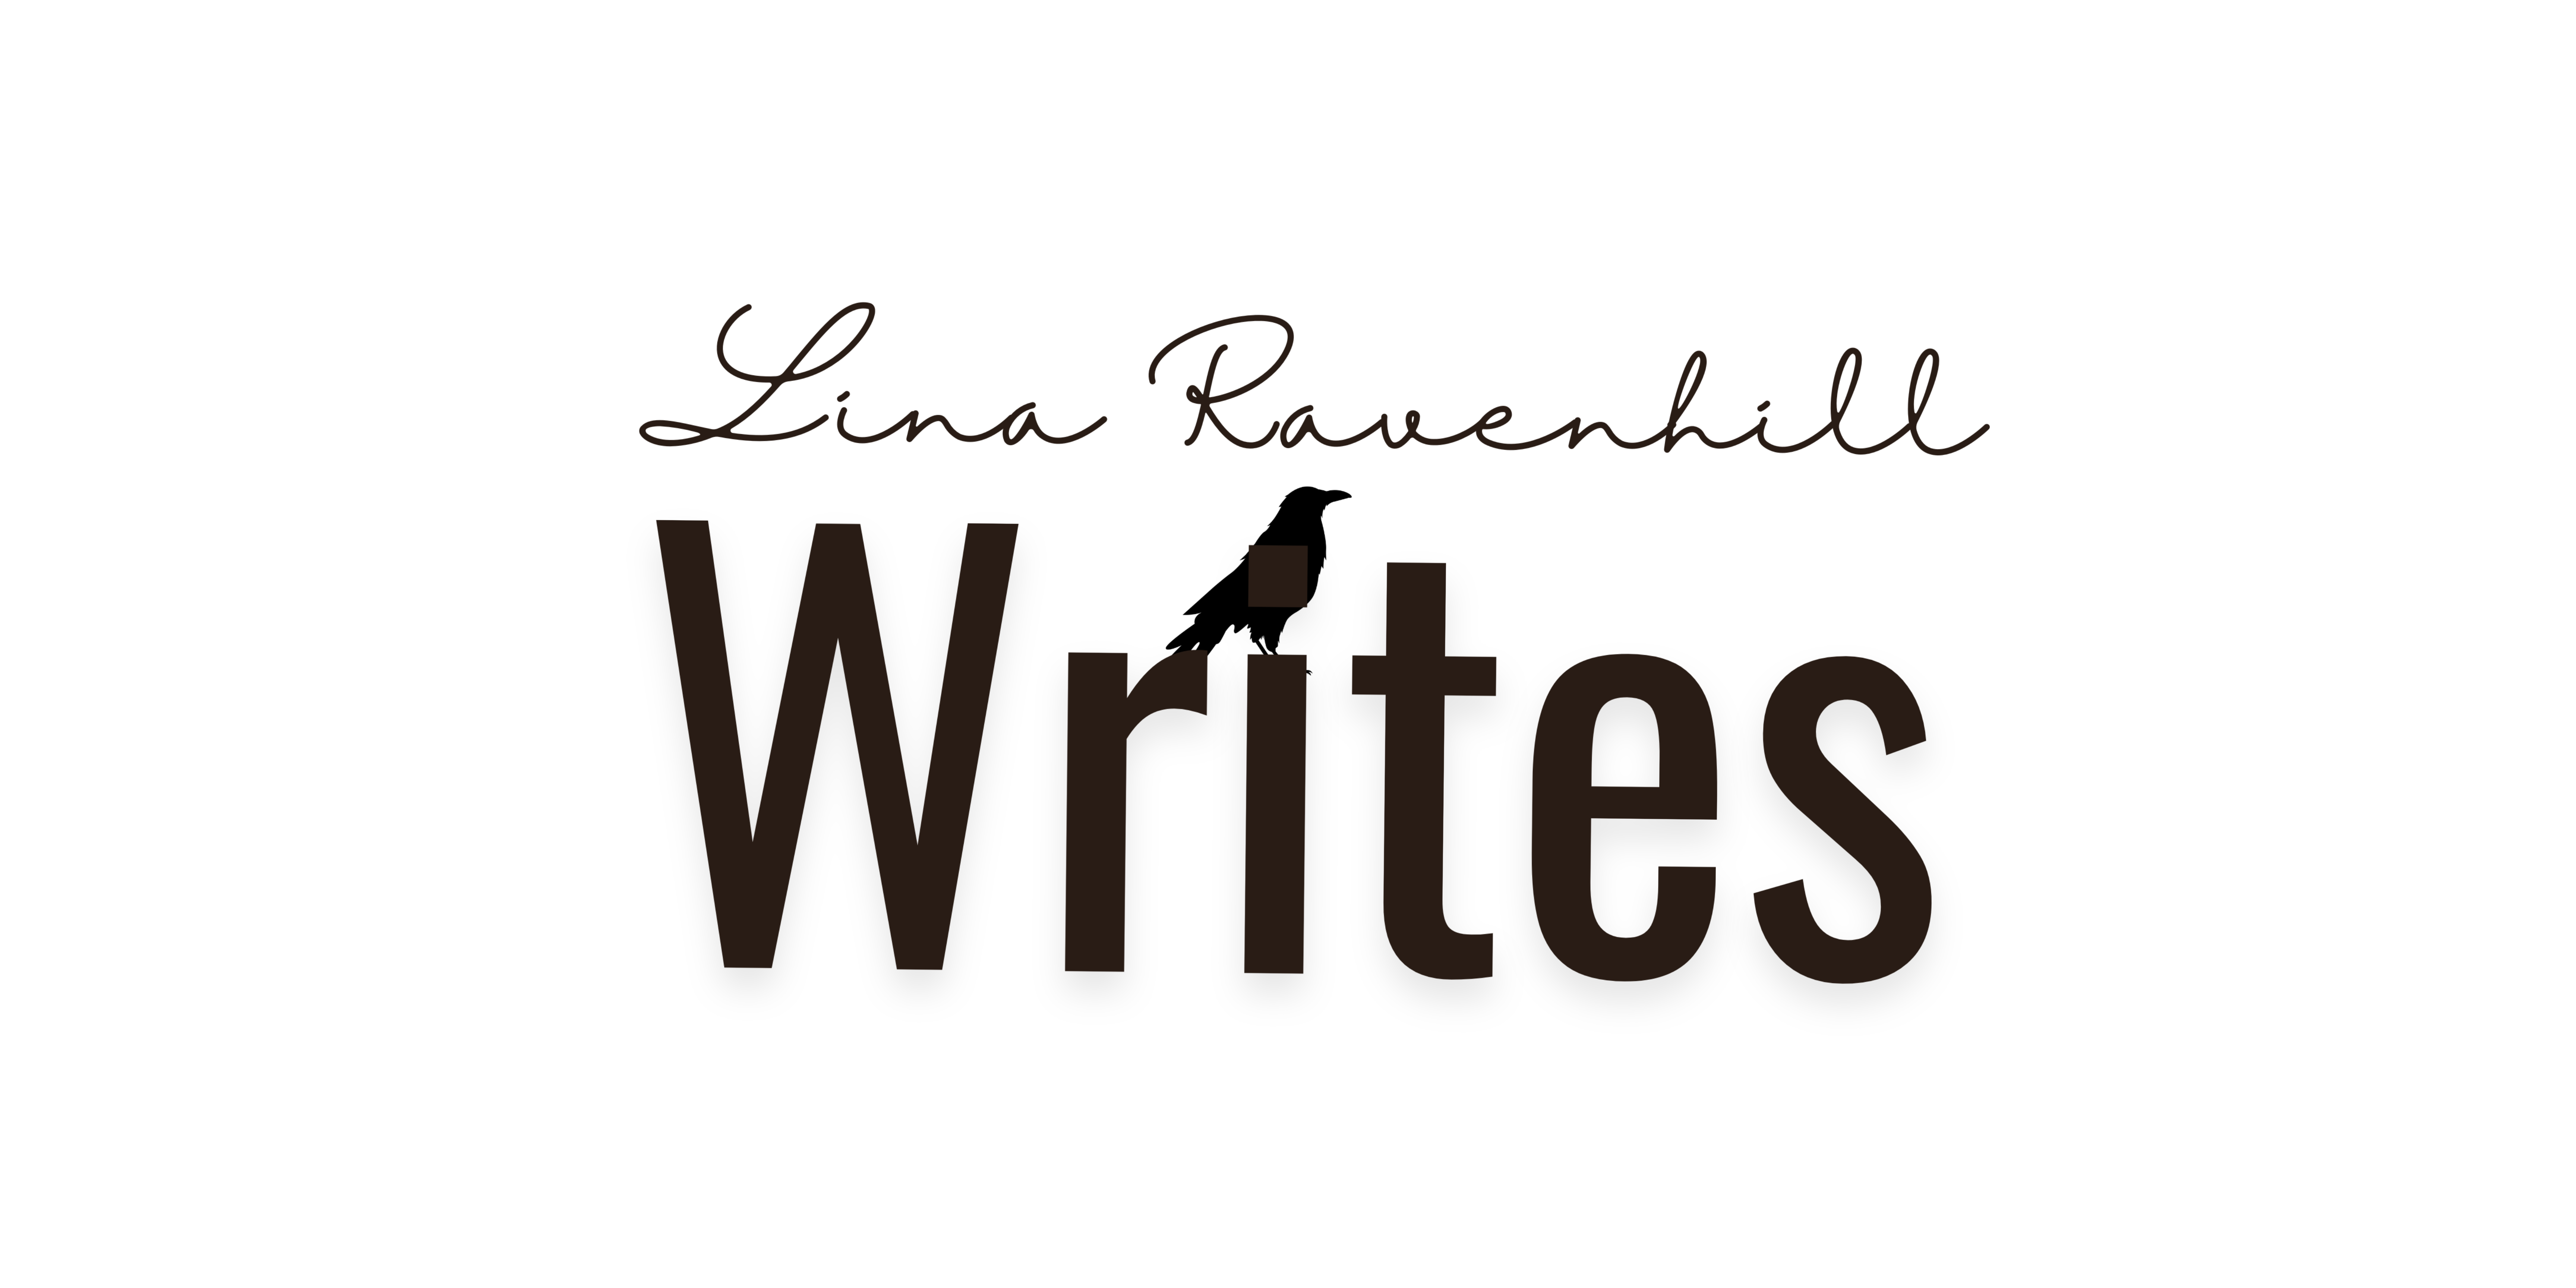 Lina Ravenhill writes